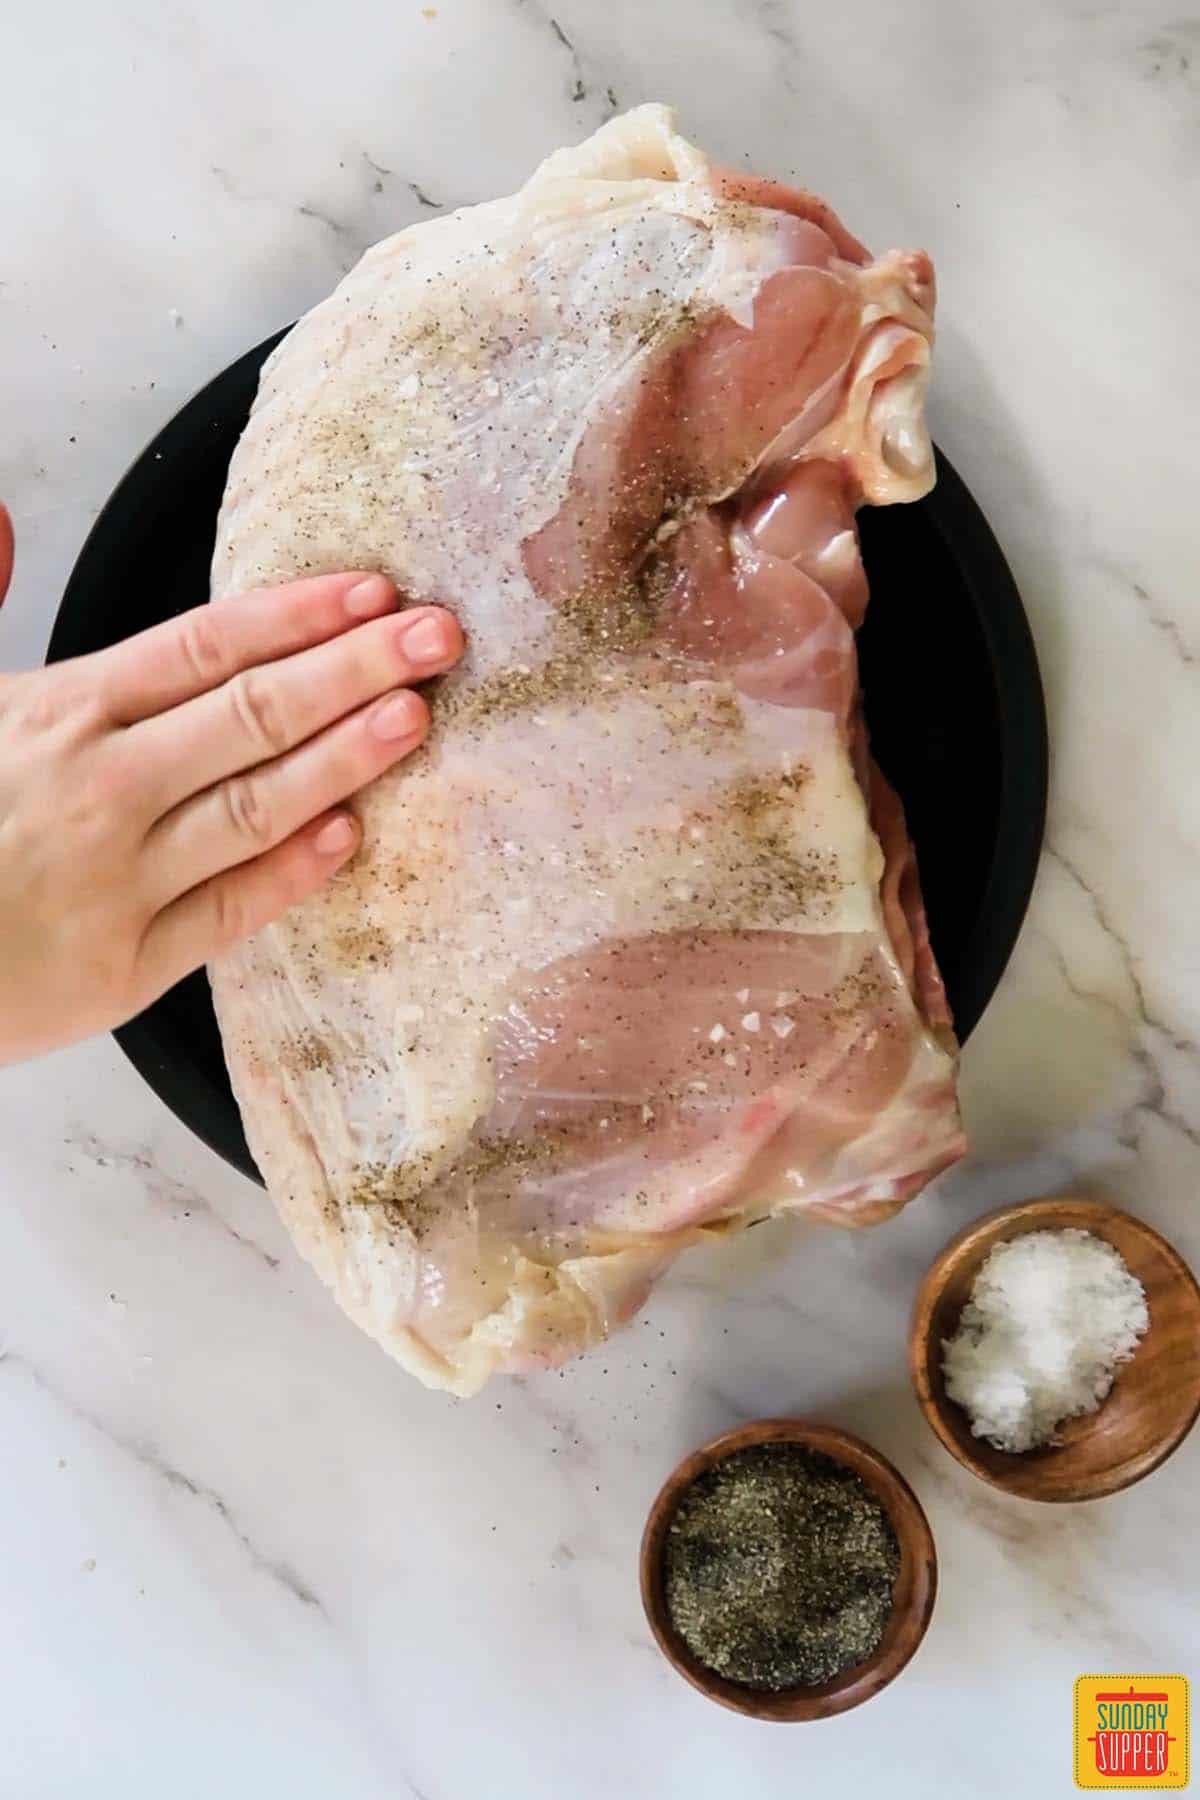 patting turkey with seasoning